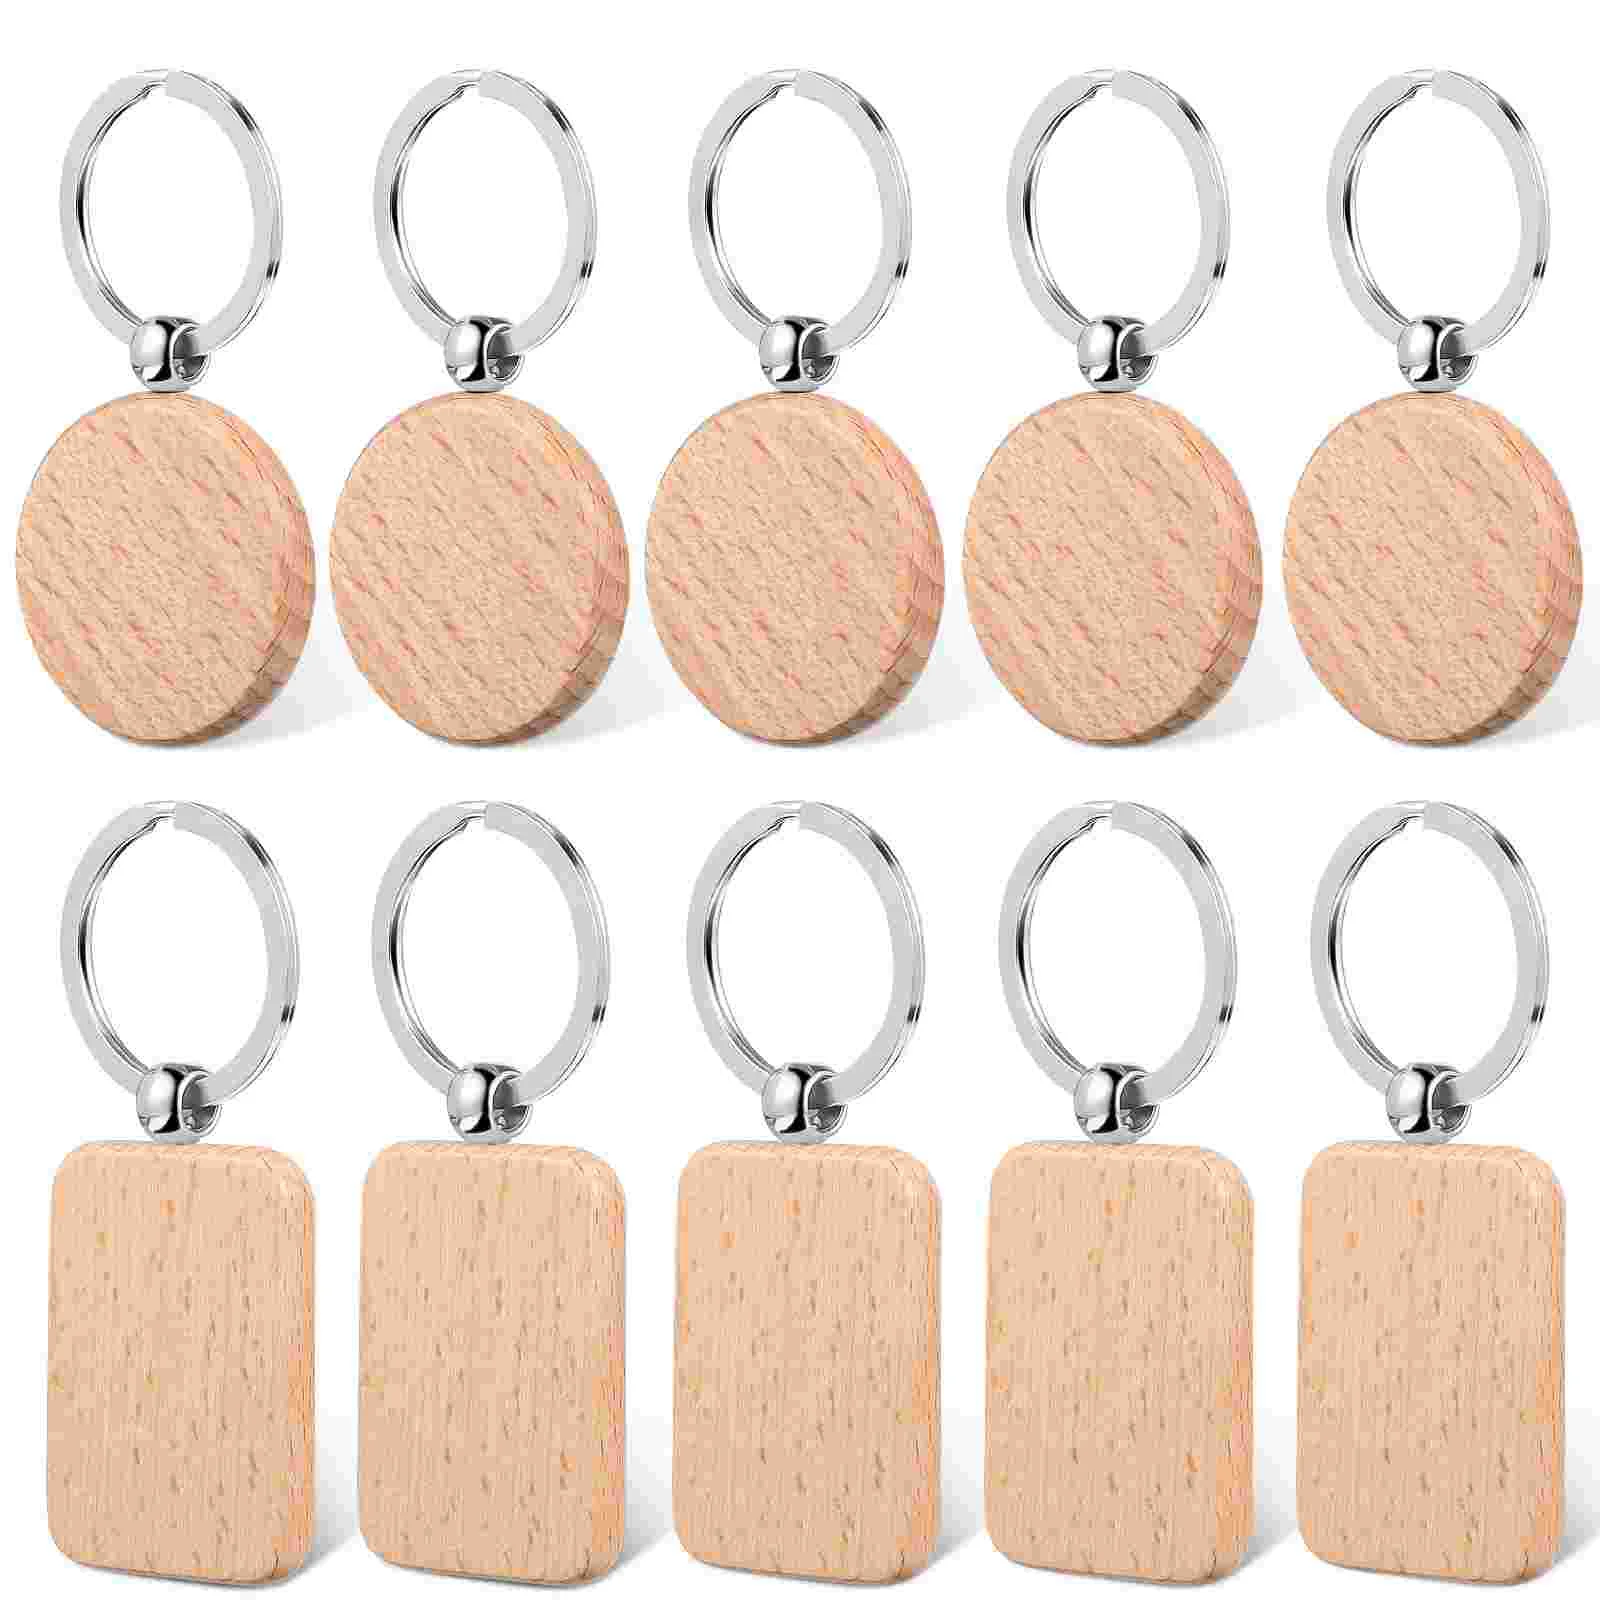 

10 Pcs Woodblock Print Wooden Tag Keychains Blanks Rectangle Keyrings Circle Labels Engraving Tags Small Simple